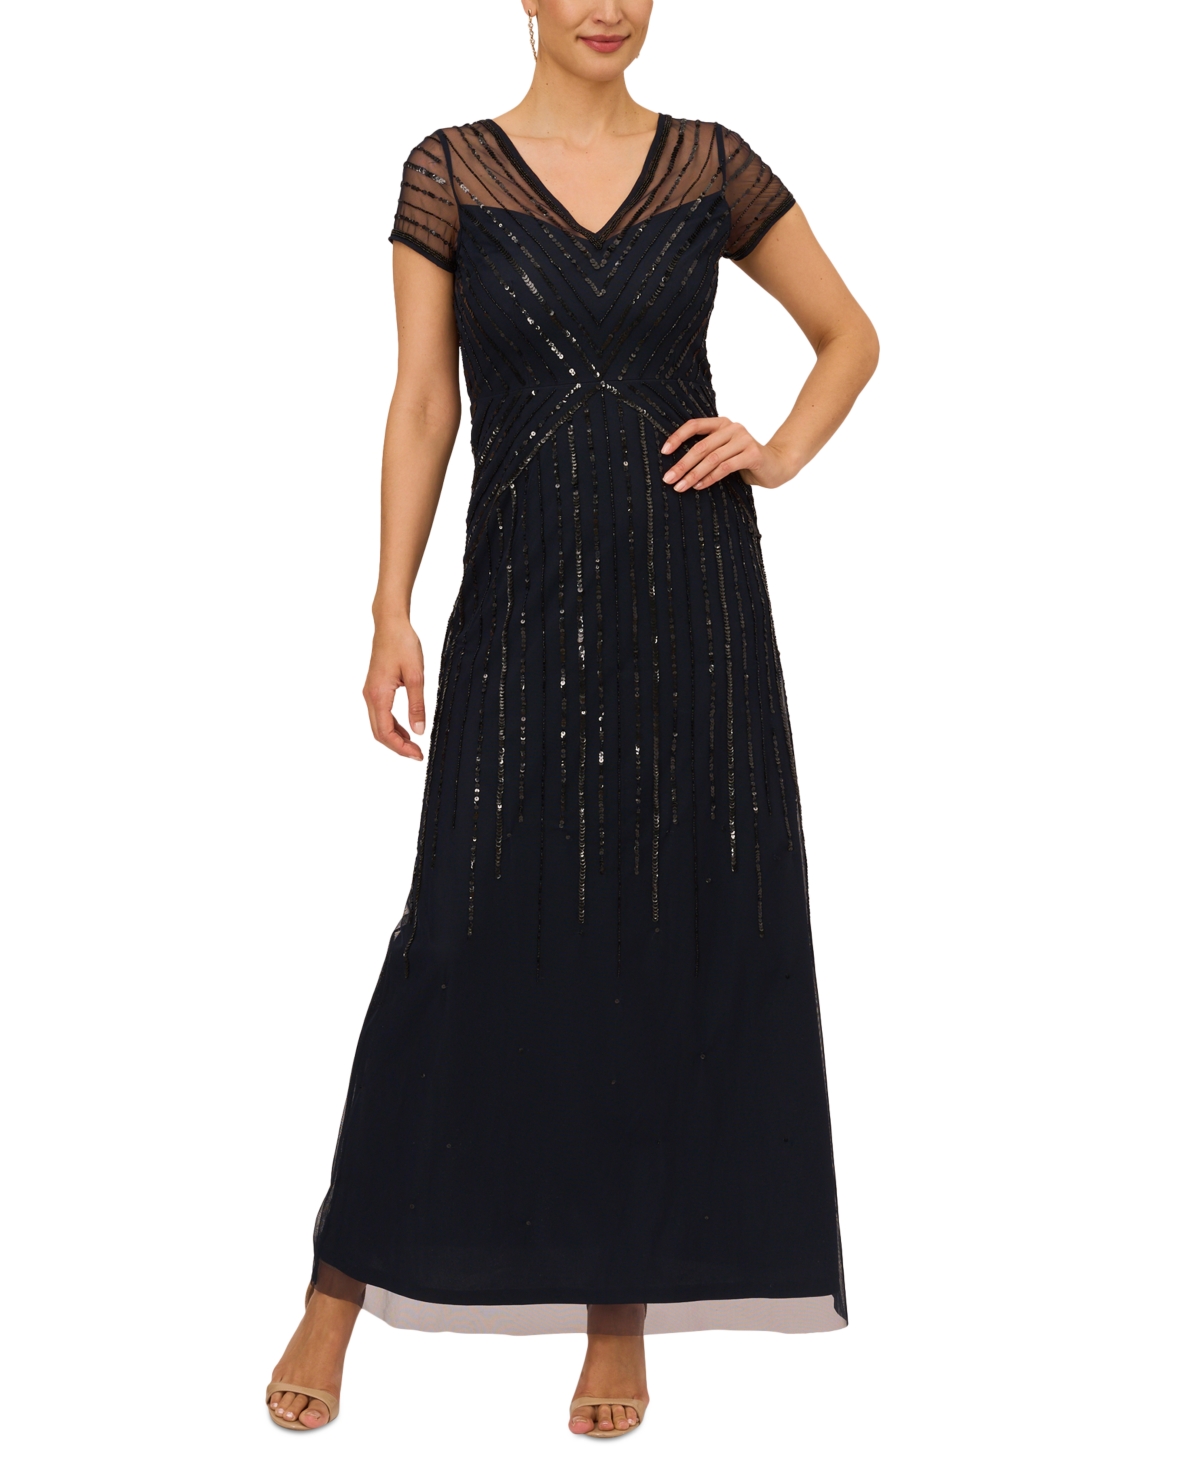 Women's V-Neck Short-Sleeve Sequin Gown - Midnight/Black